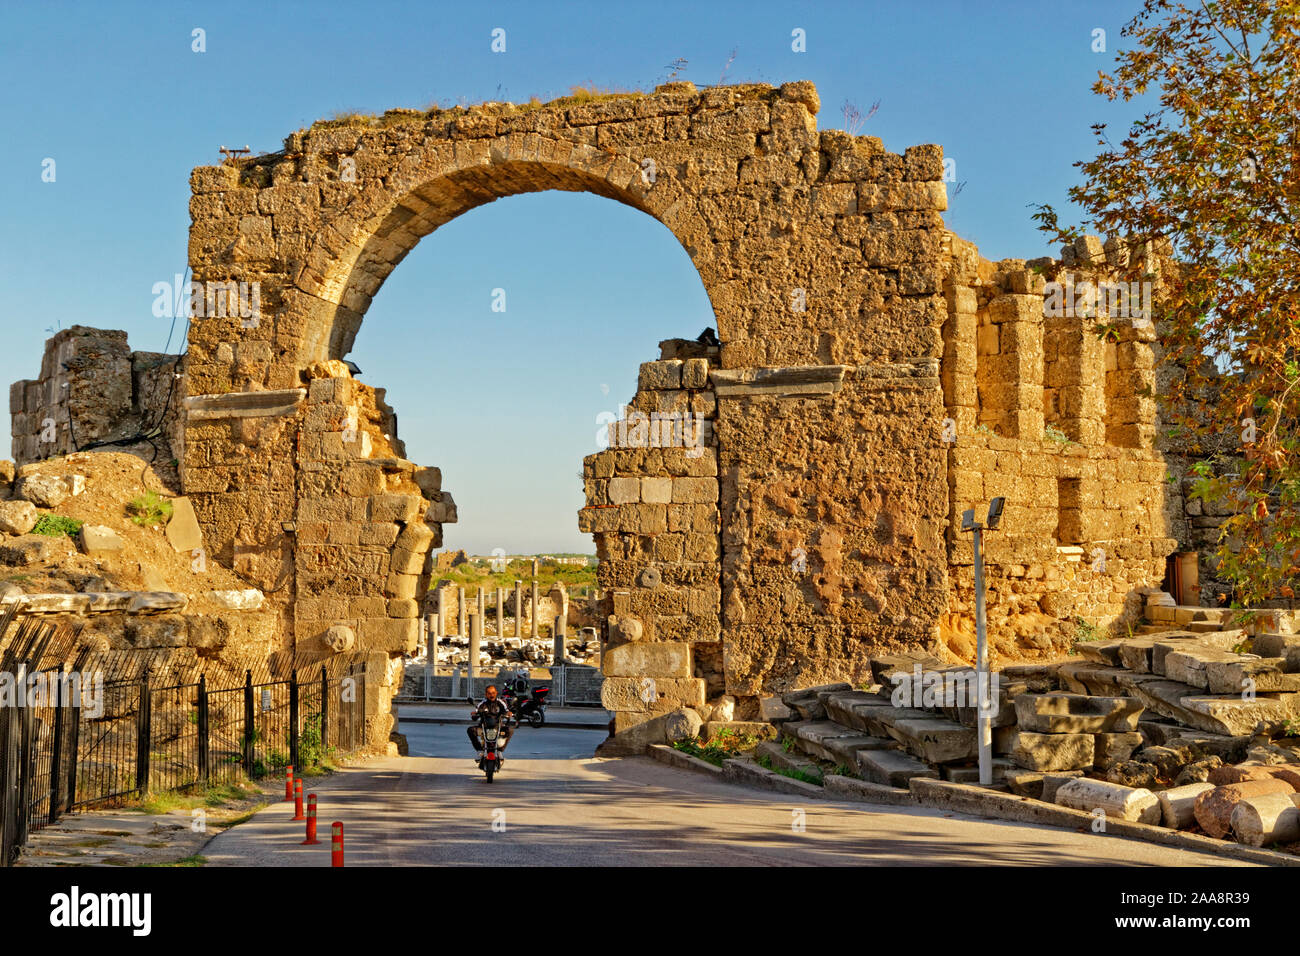 Old city gateway at Side, Turkey. Stock Photo